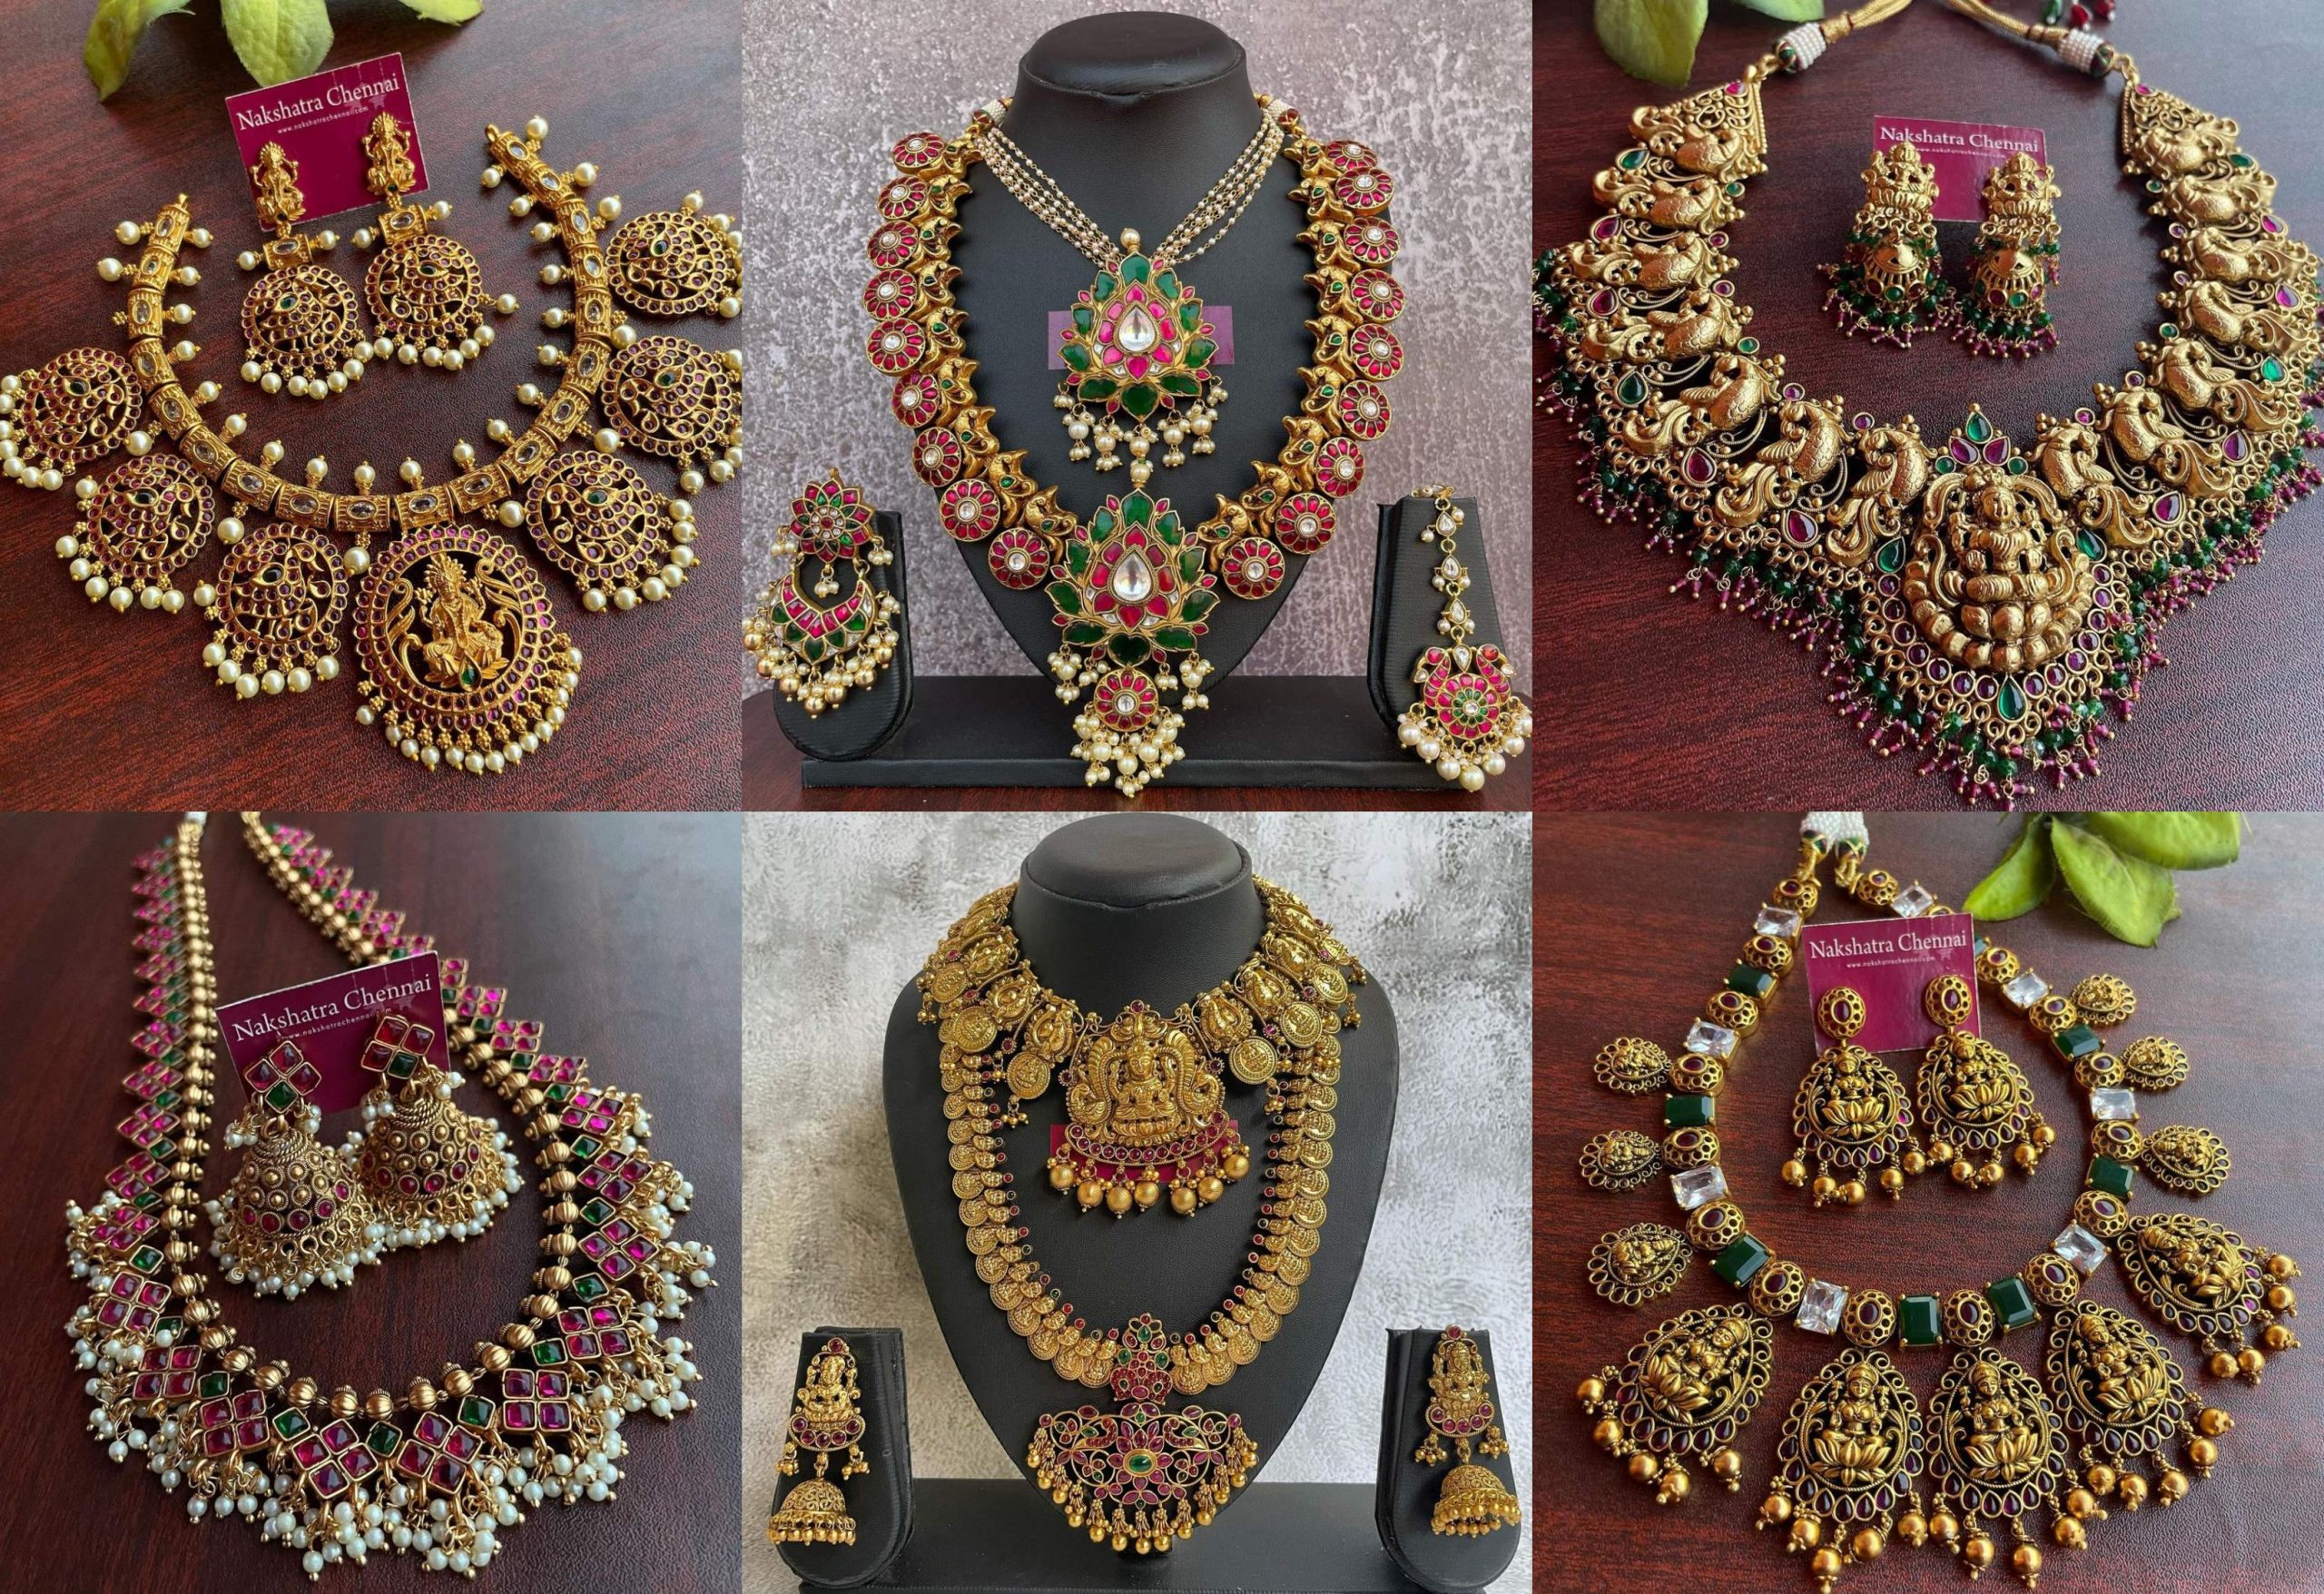 High Quality Antique Necklace From Nakshatra Chennai